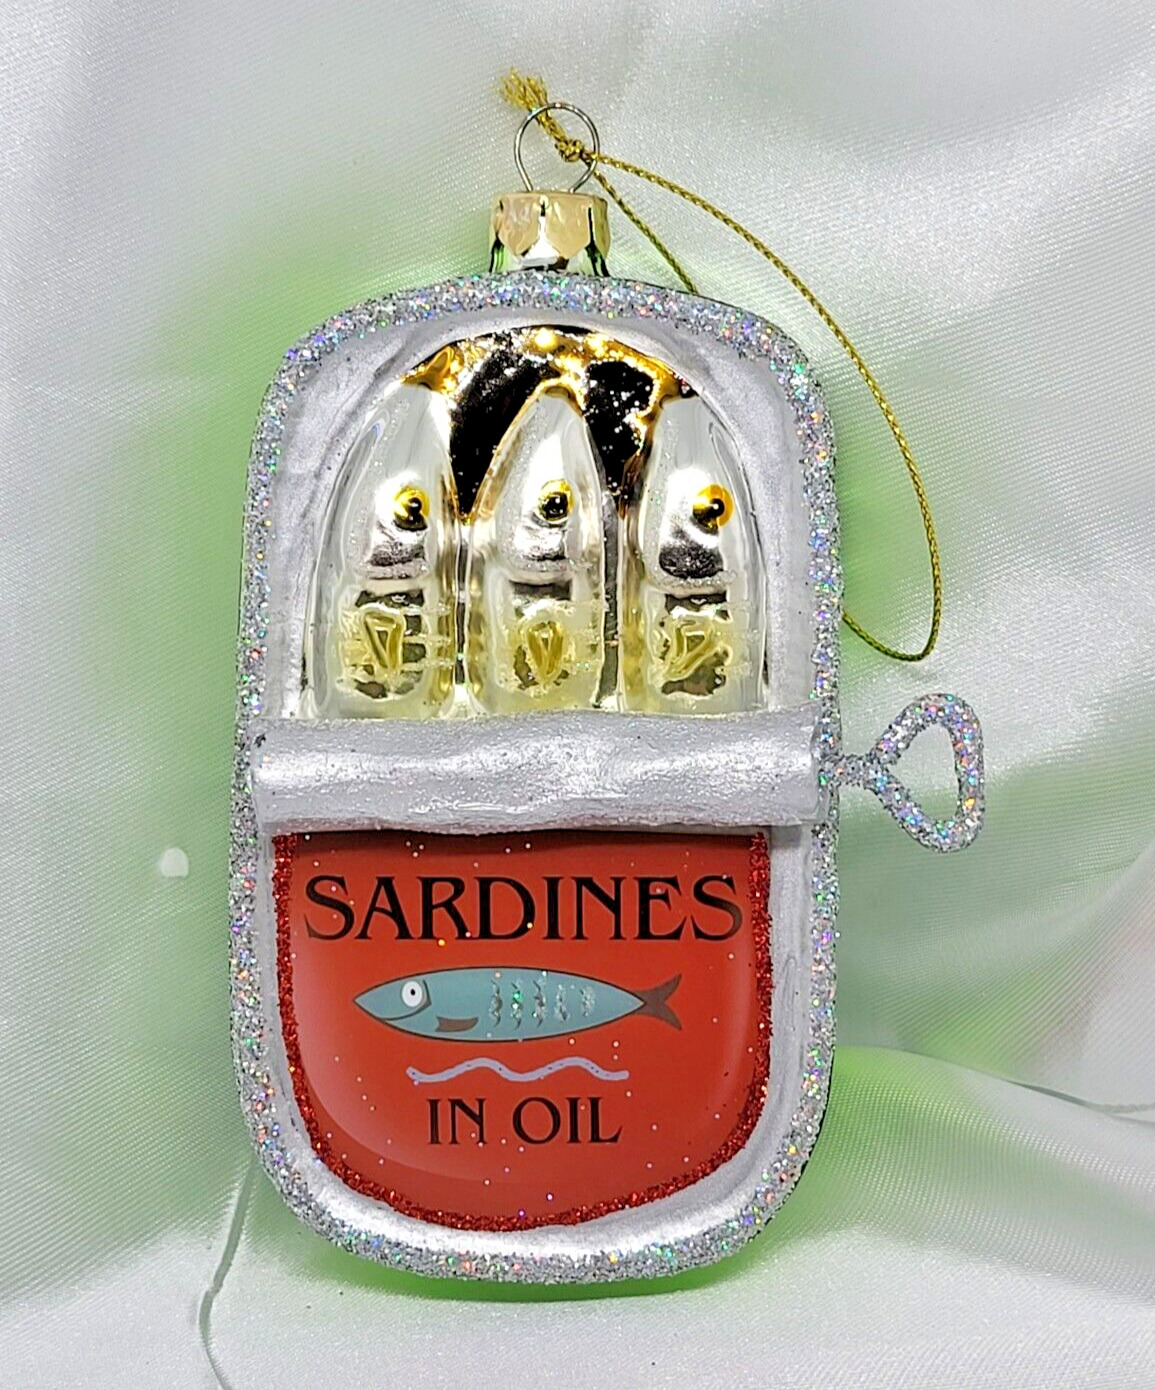 sardines ornament food snack funny gag gift ocean sea beach theme